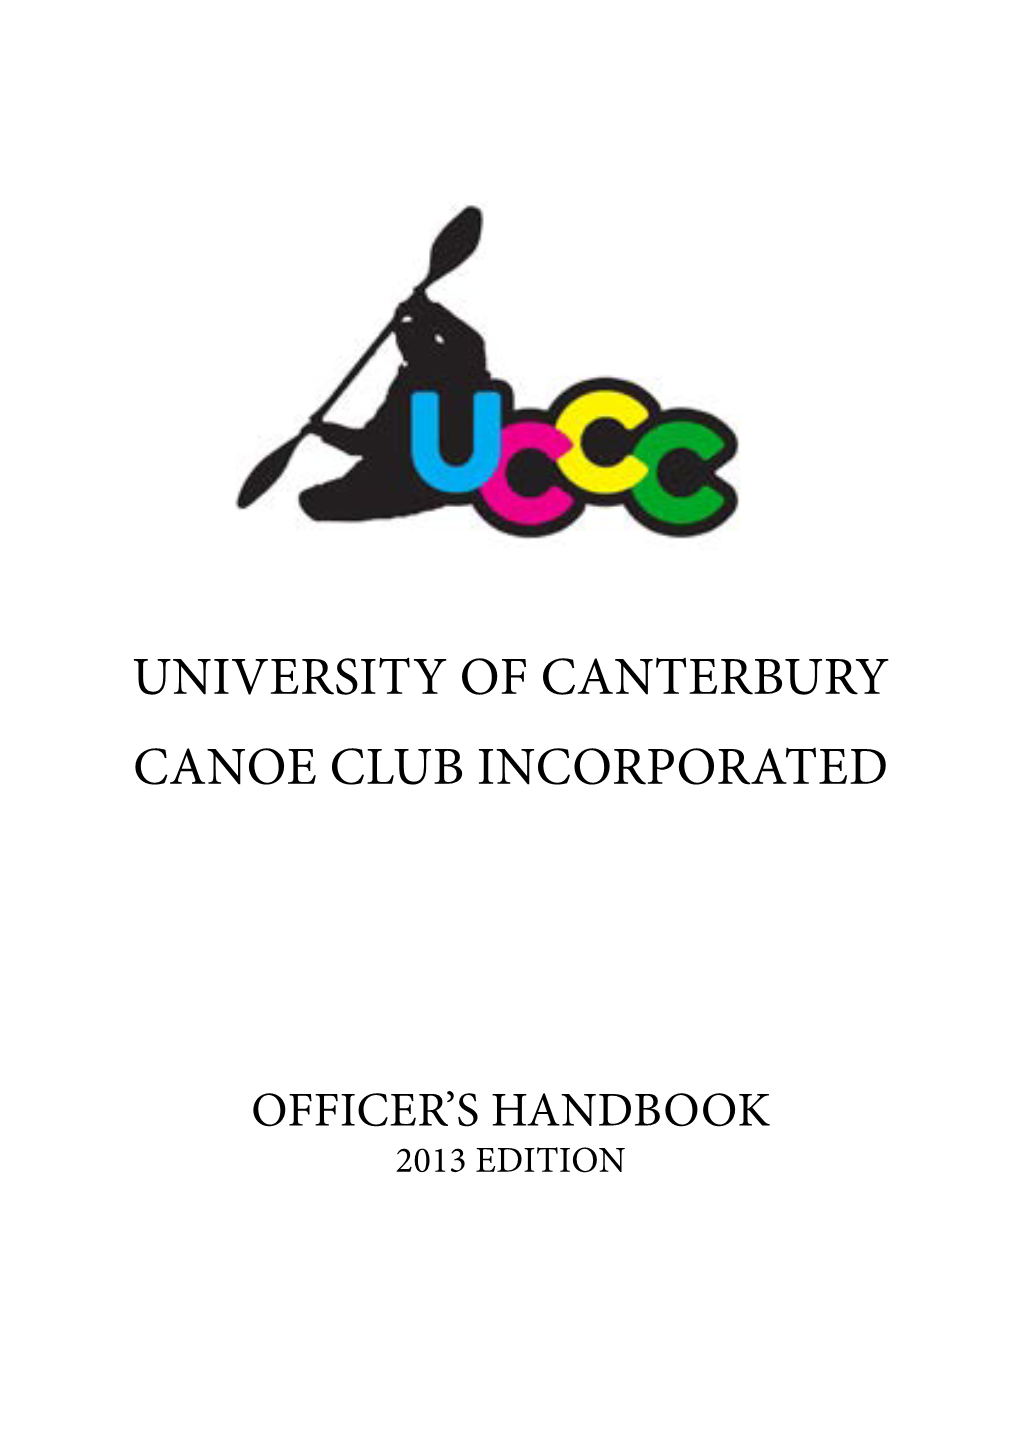 University of Canterbury Canoe Club INCORPORATED